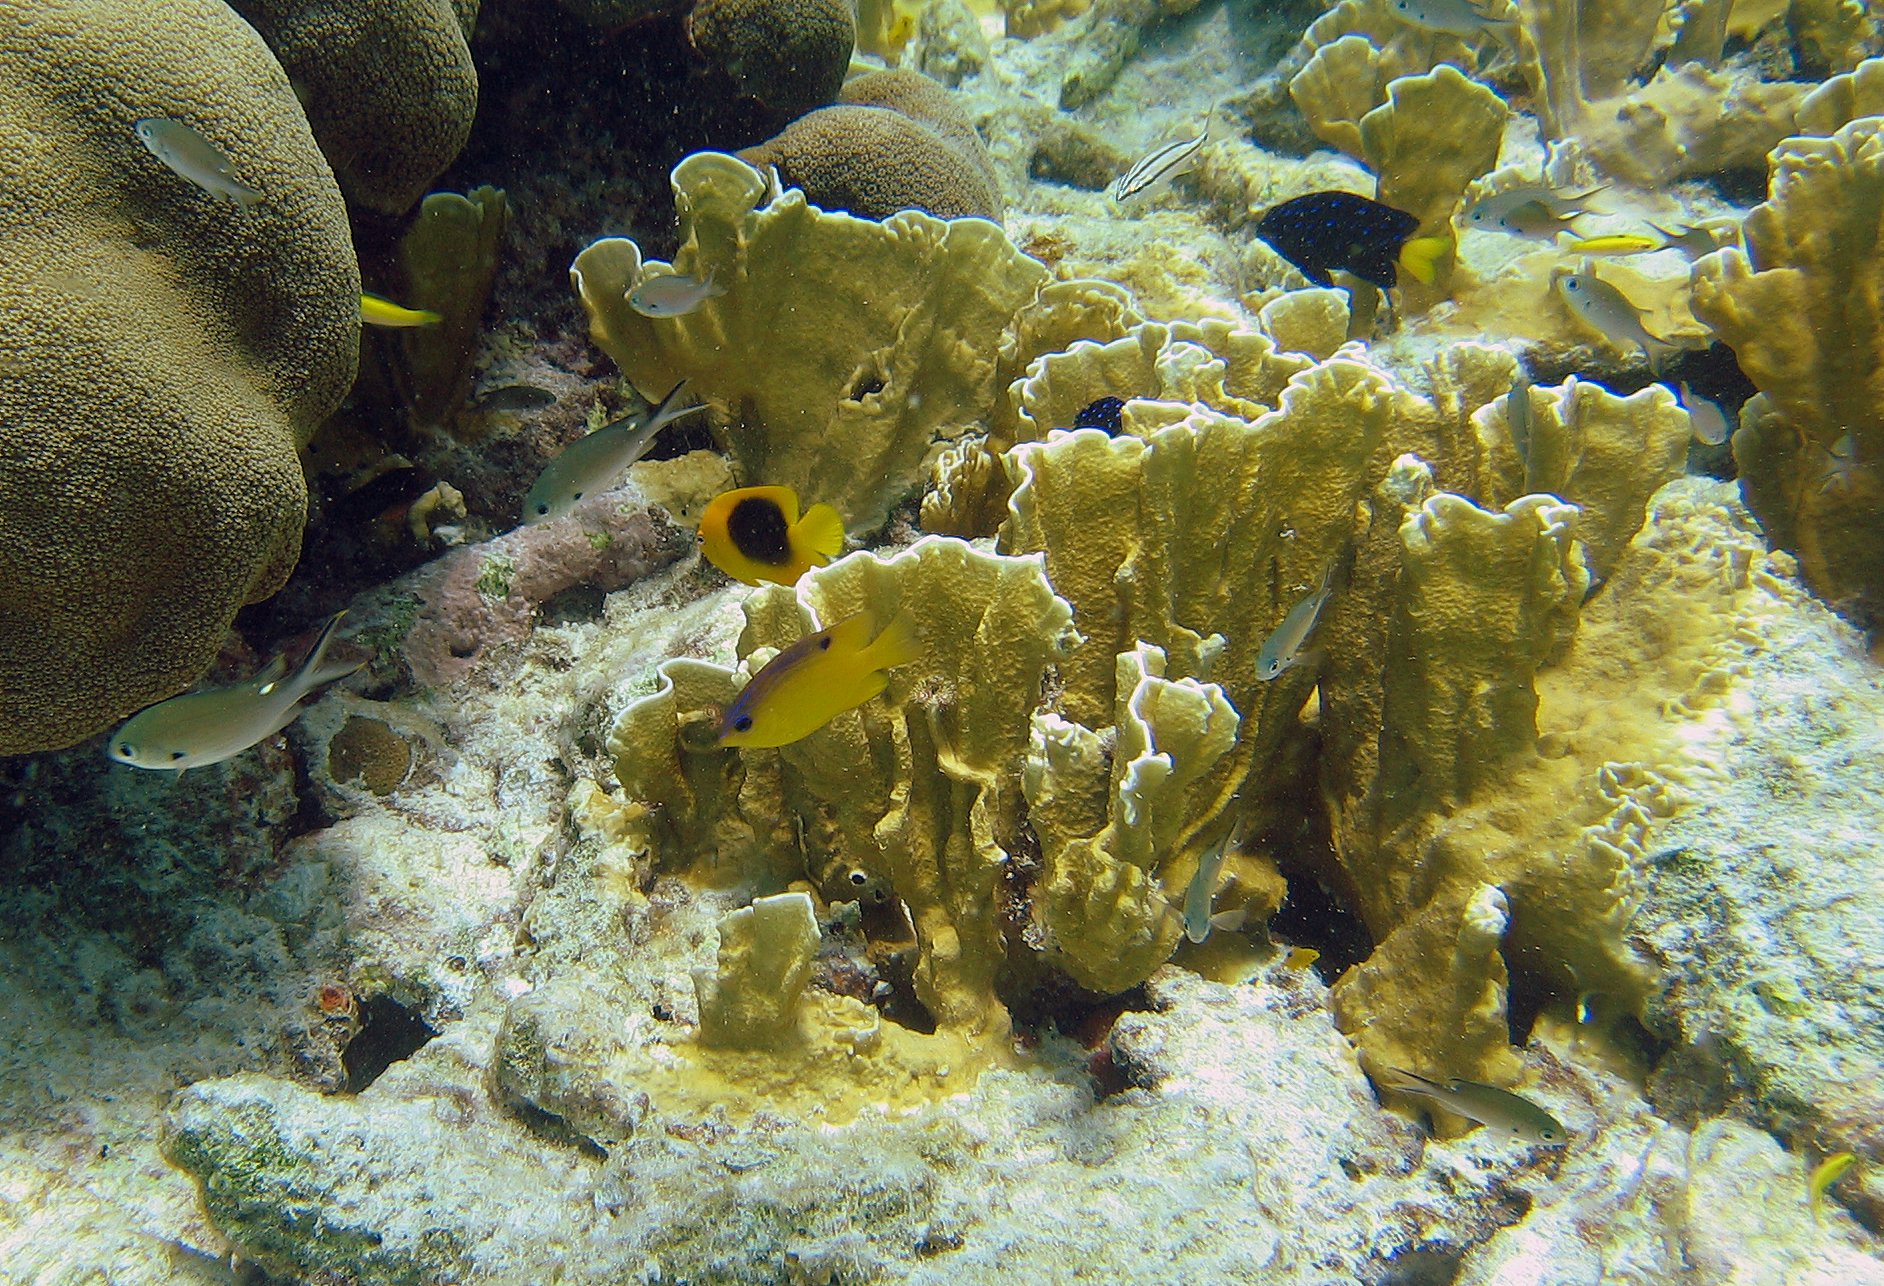 Juv. fish in Bonaire